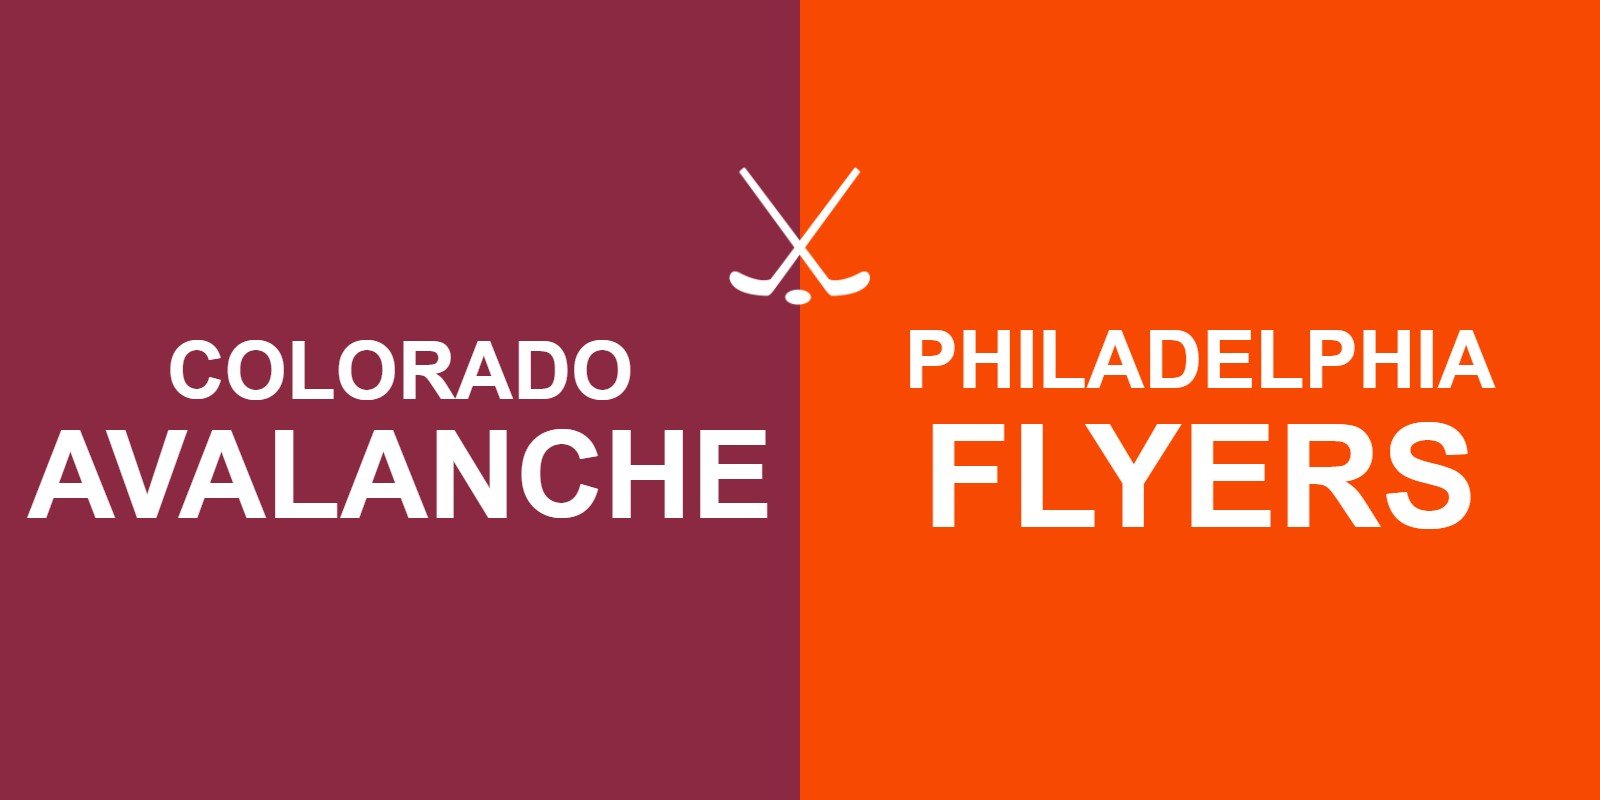 Avalanche vs Flyers